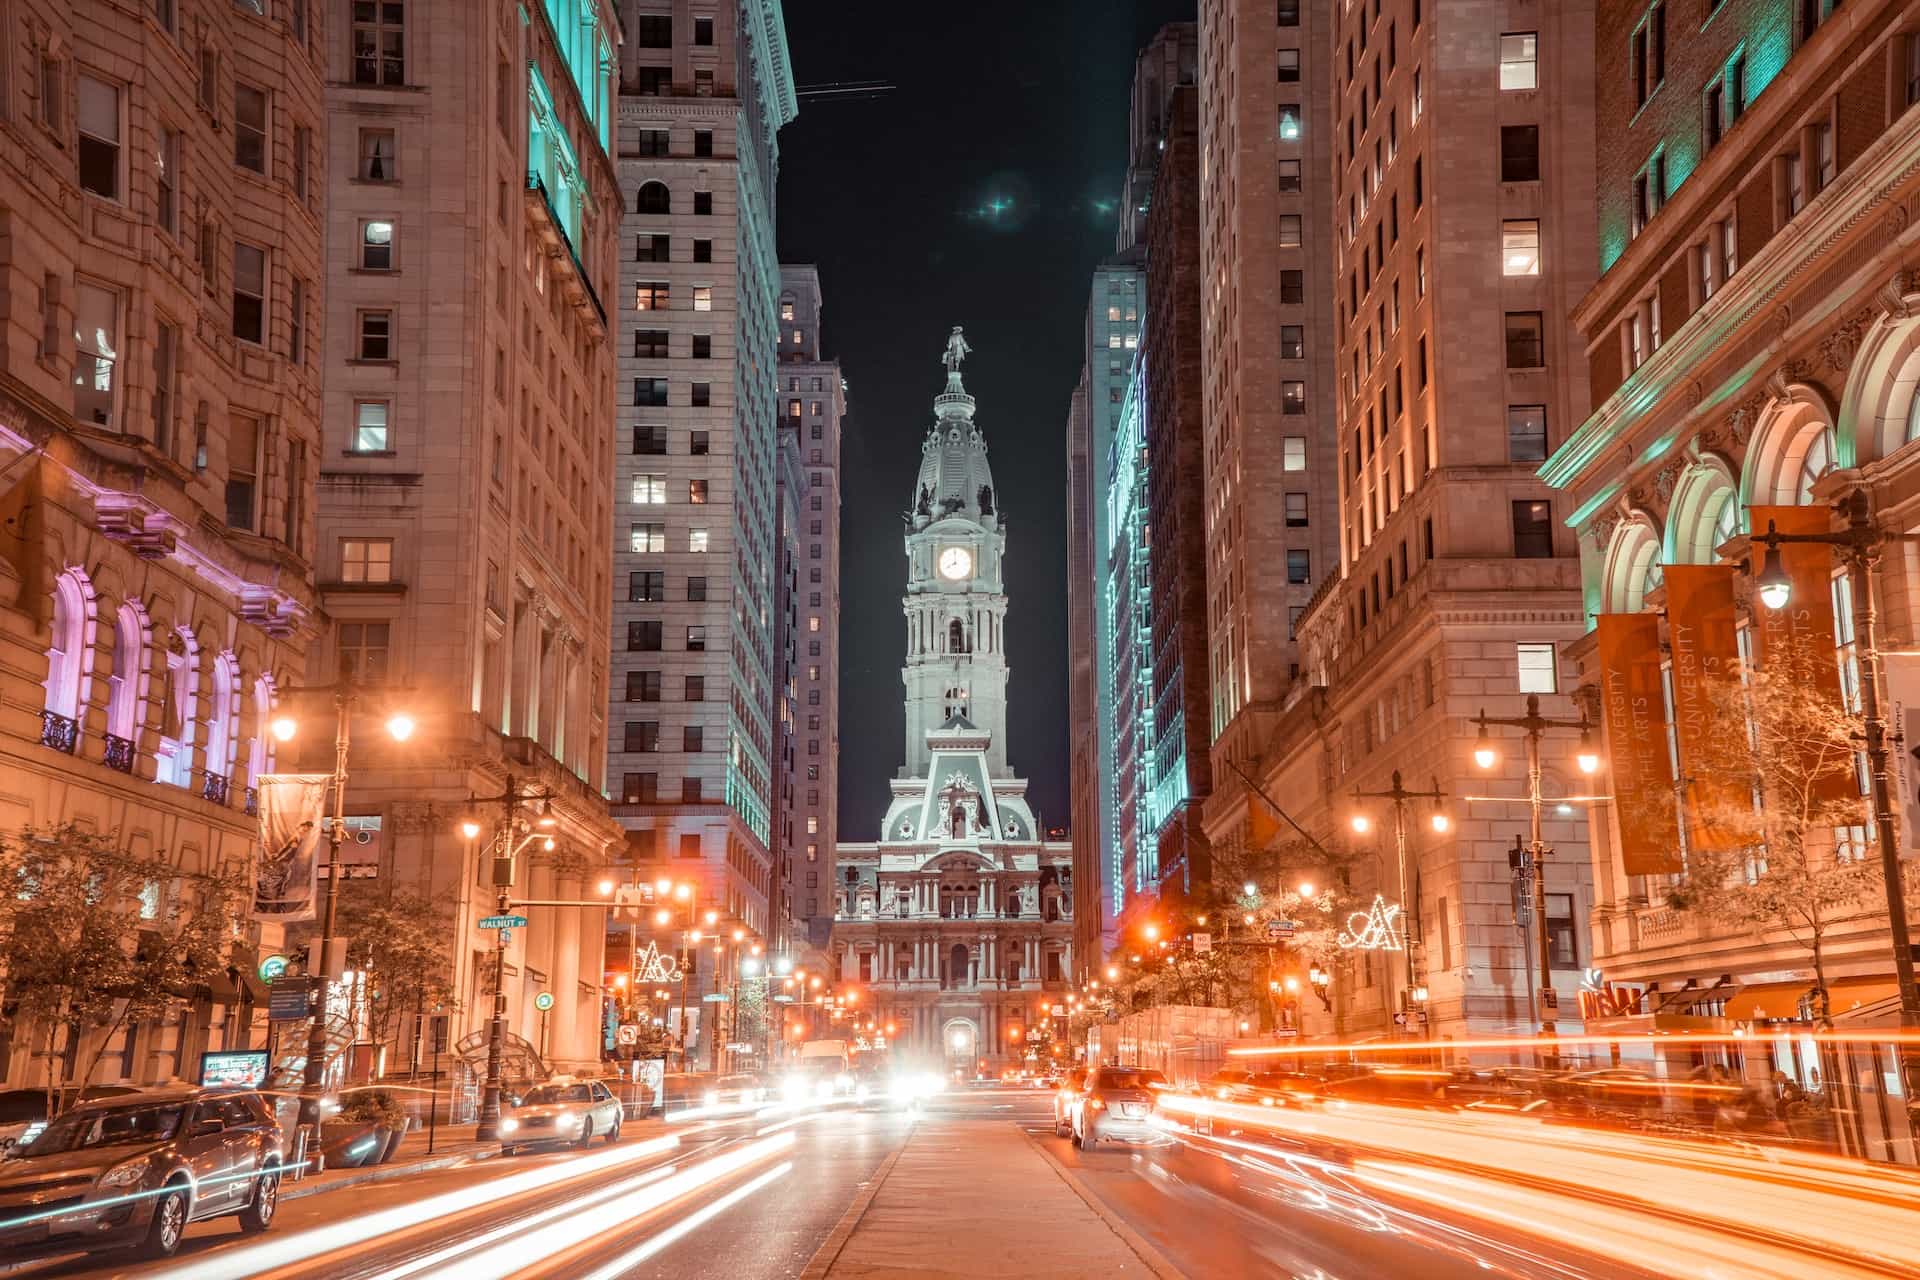 Sebuah jalan yang sibuk di pusat kota Philadelphia, Pennsylvania, menampilkan bidikan lalu lintas yang berlalu-lalang dengan eksposur panjang dan menara jam yang tinggi di ujung jalan.